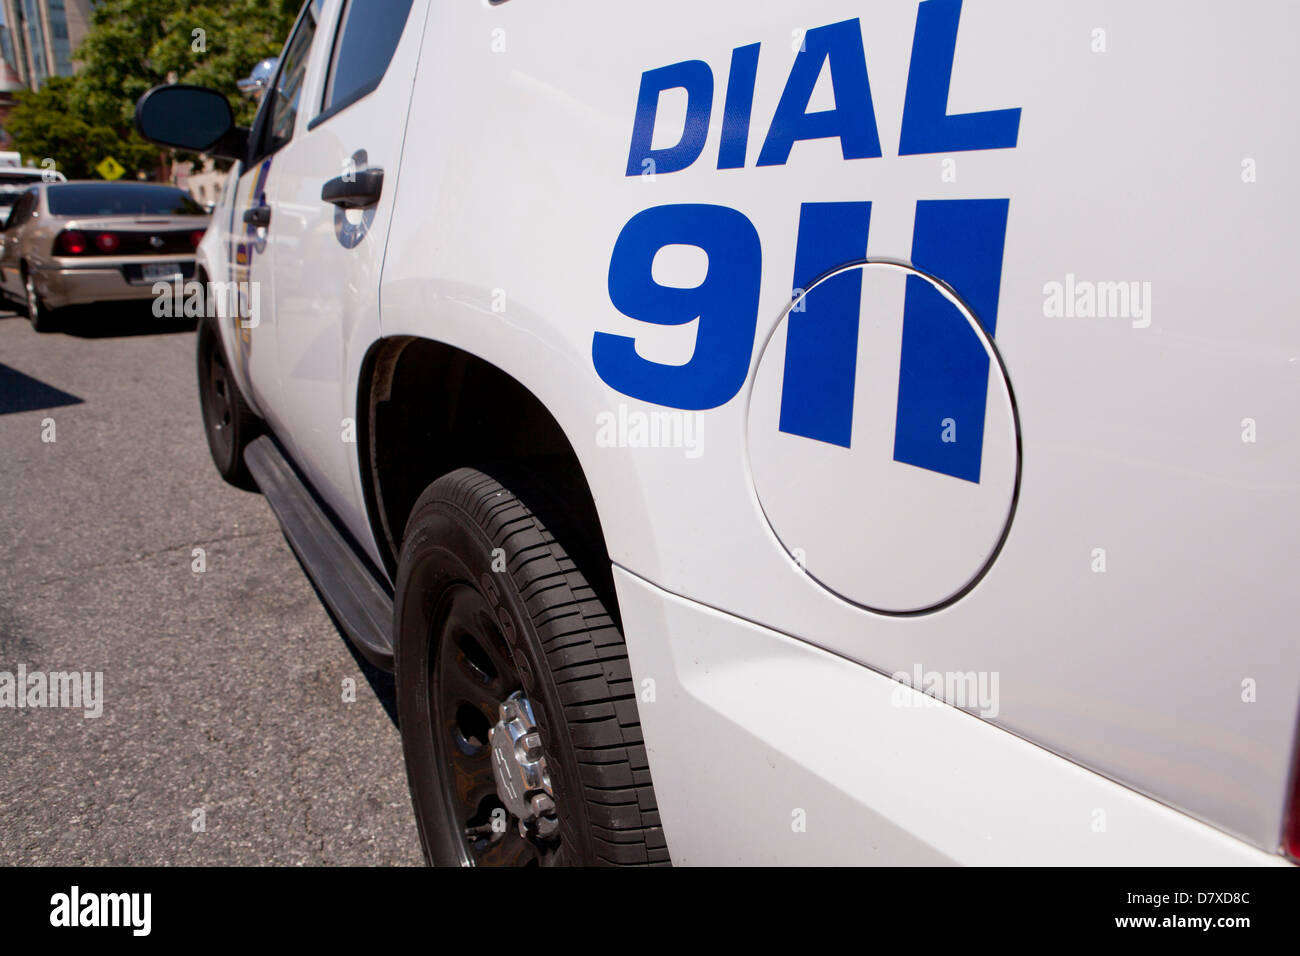 Dial 911 sign on police car - Washington, DC USA Stock Photo